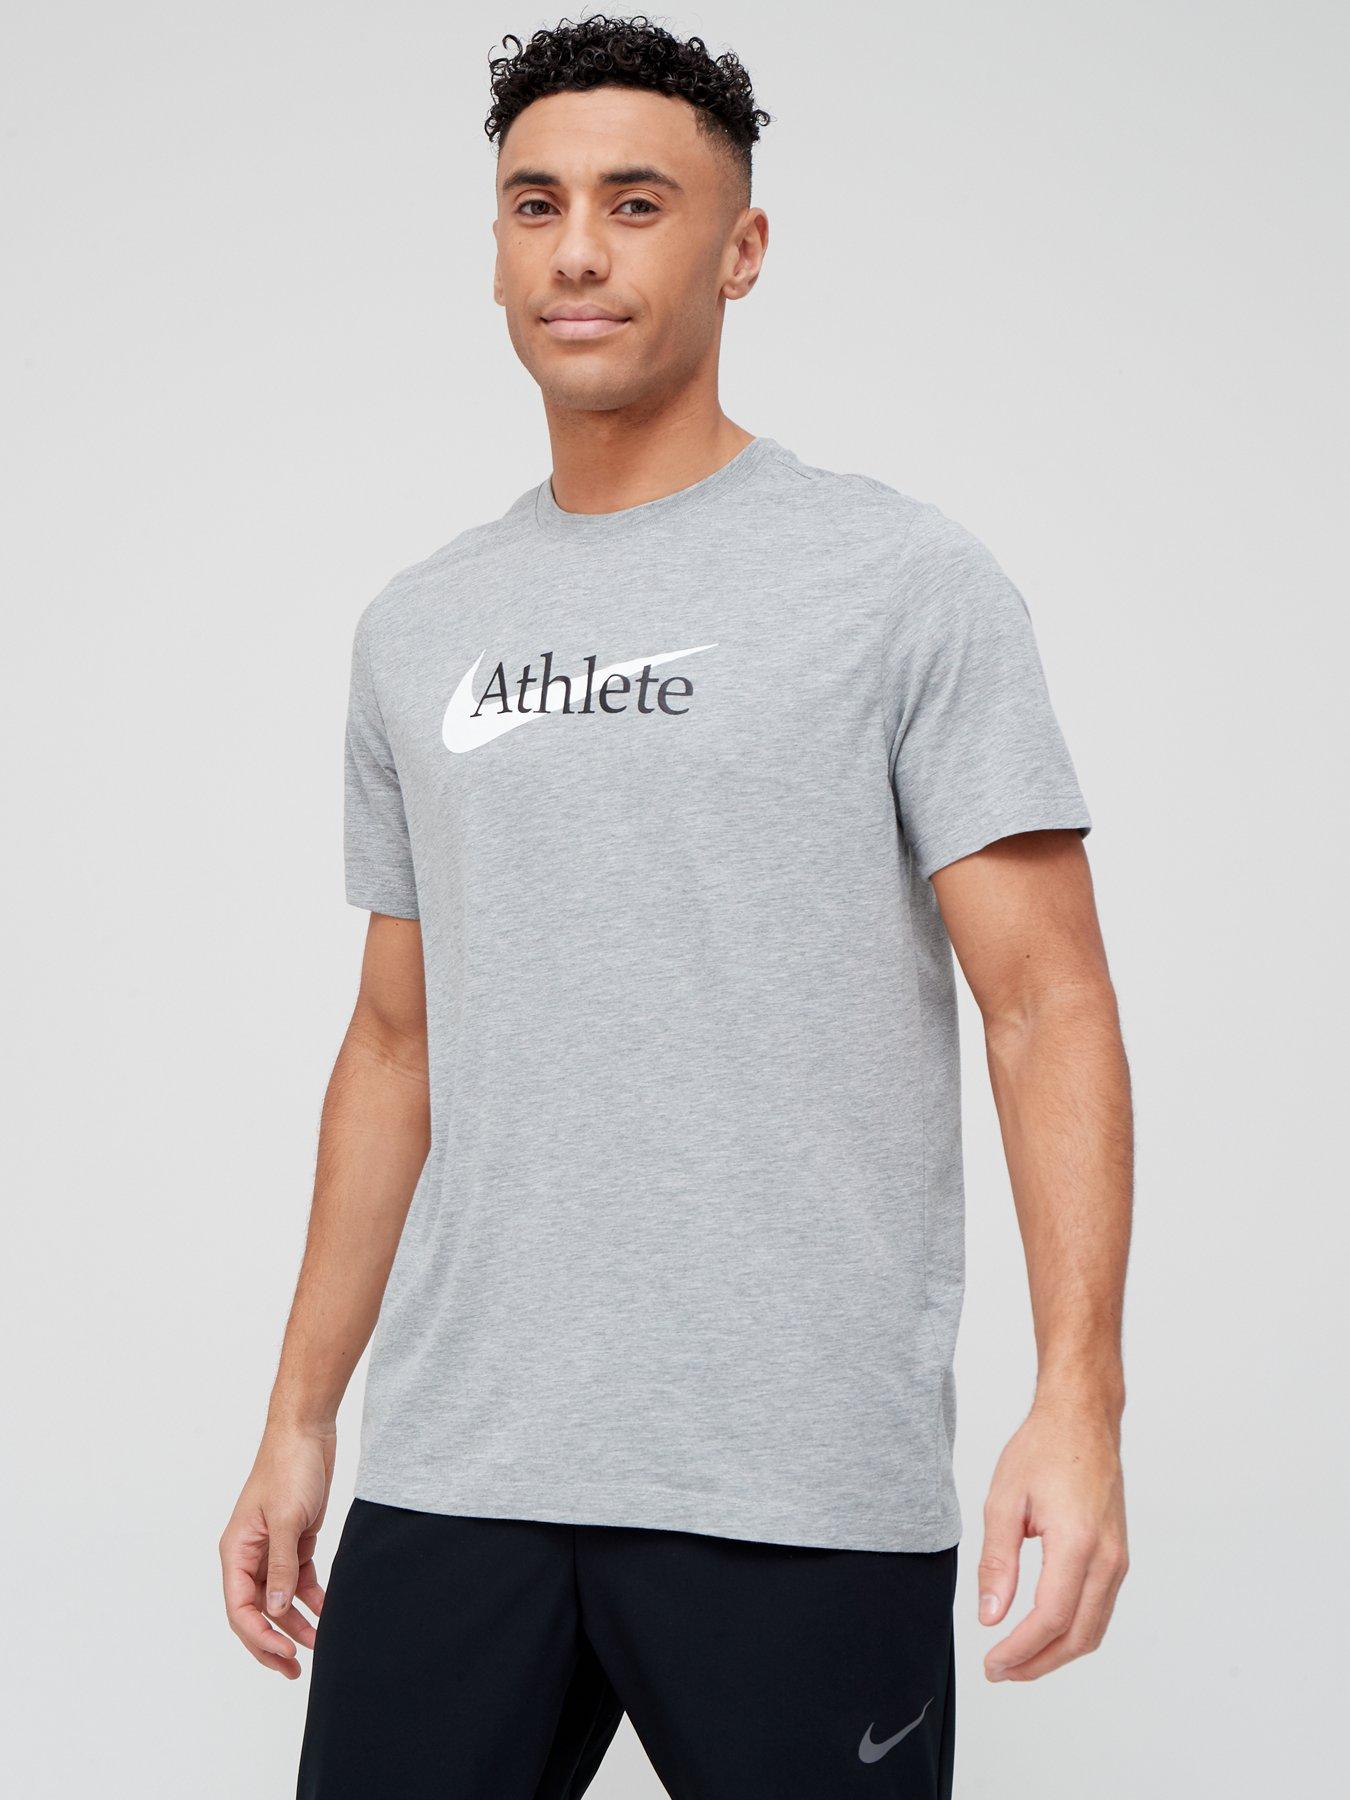 nike athlete t shirt